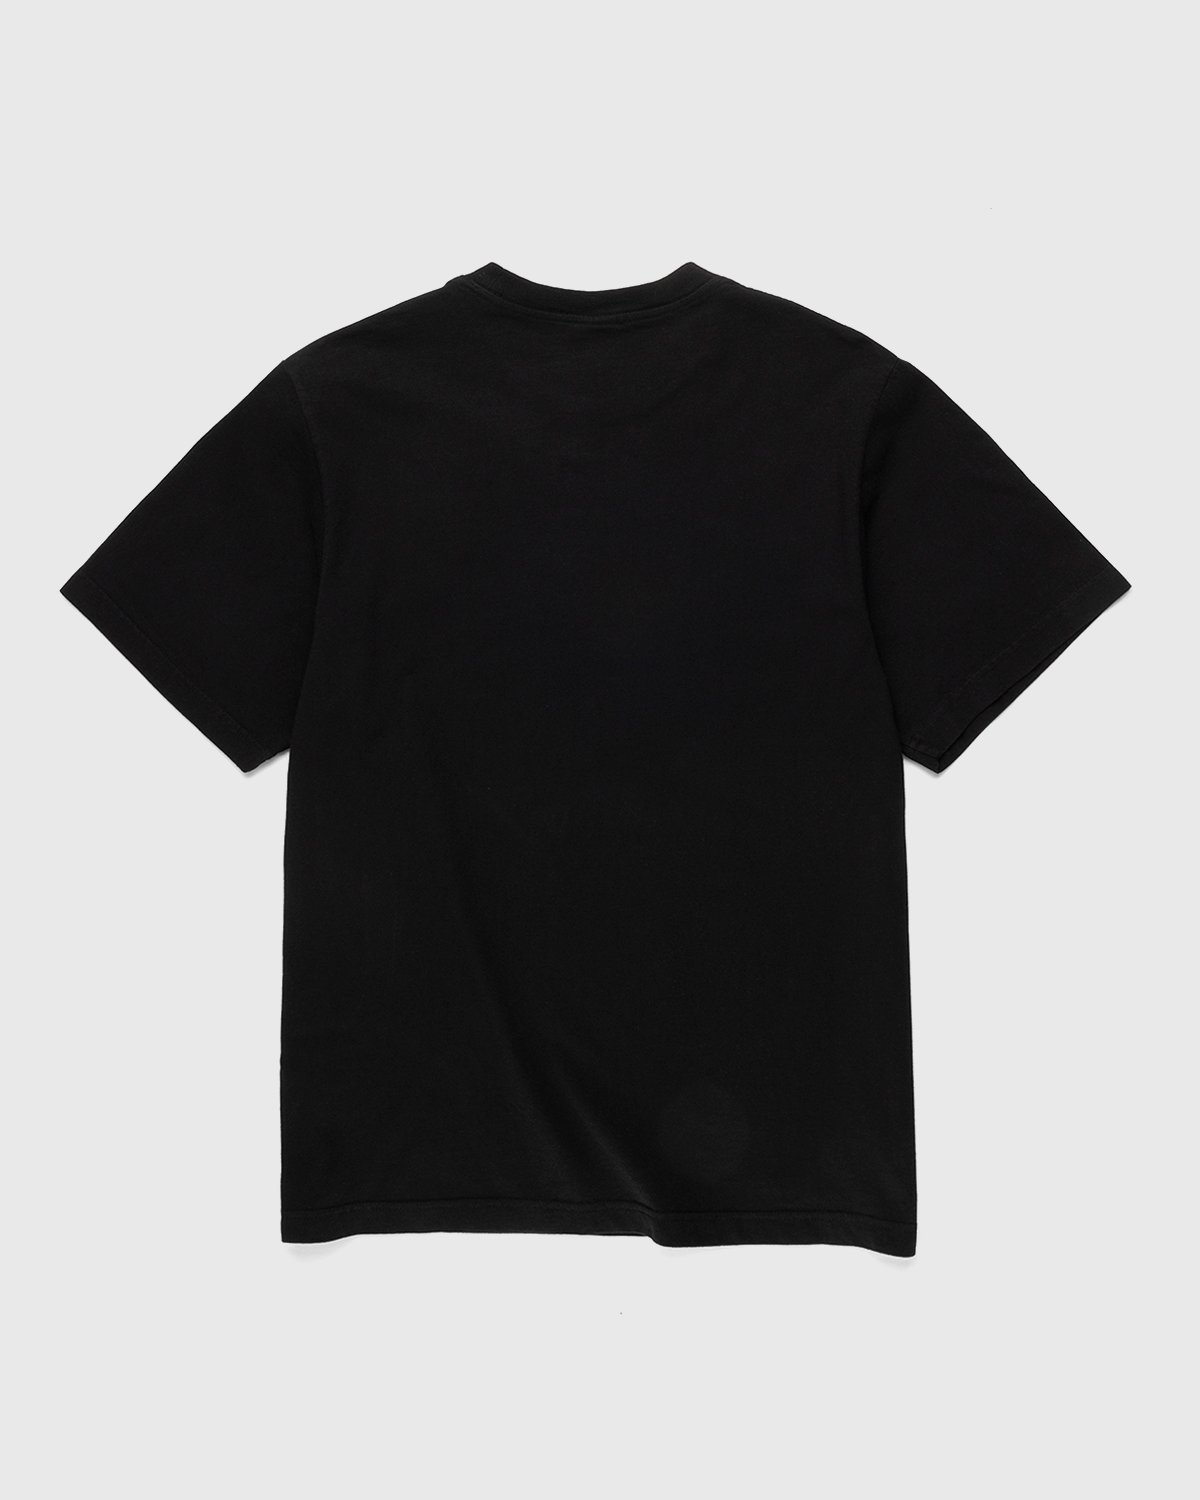 Noon Goons - Compass Tshirt Black - Clothing - Black - Image 2